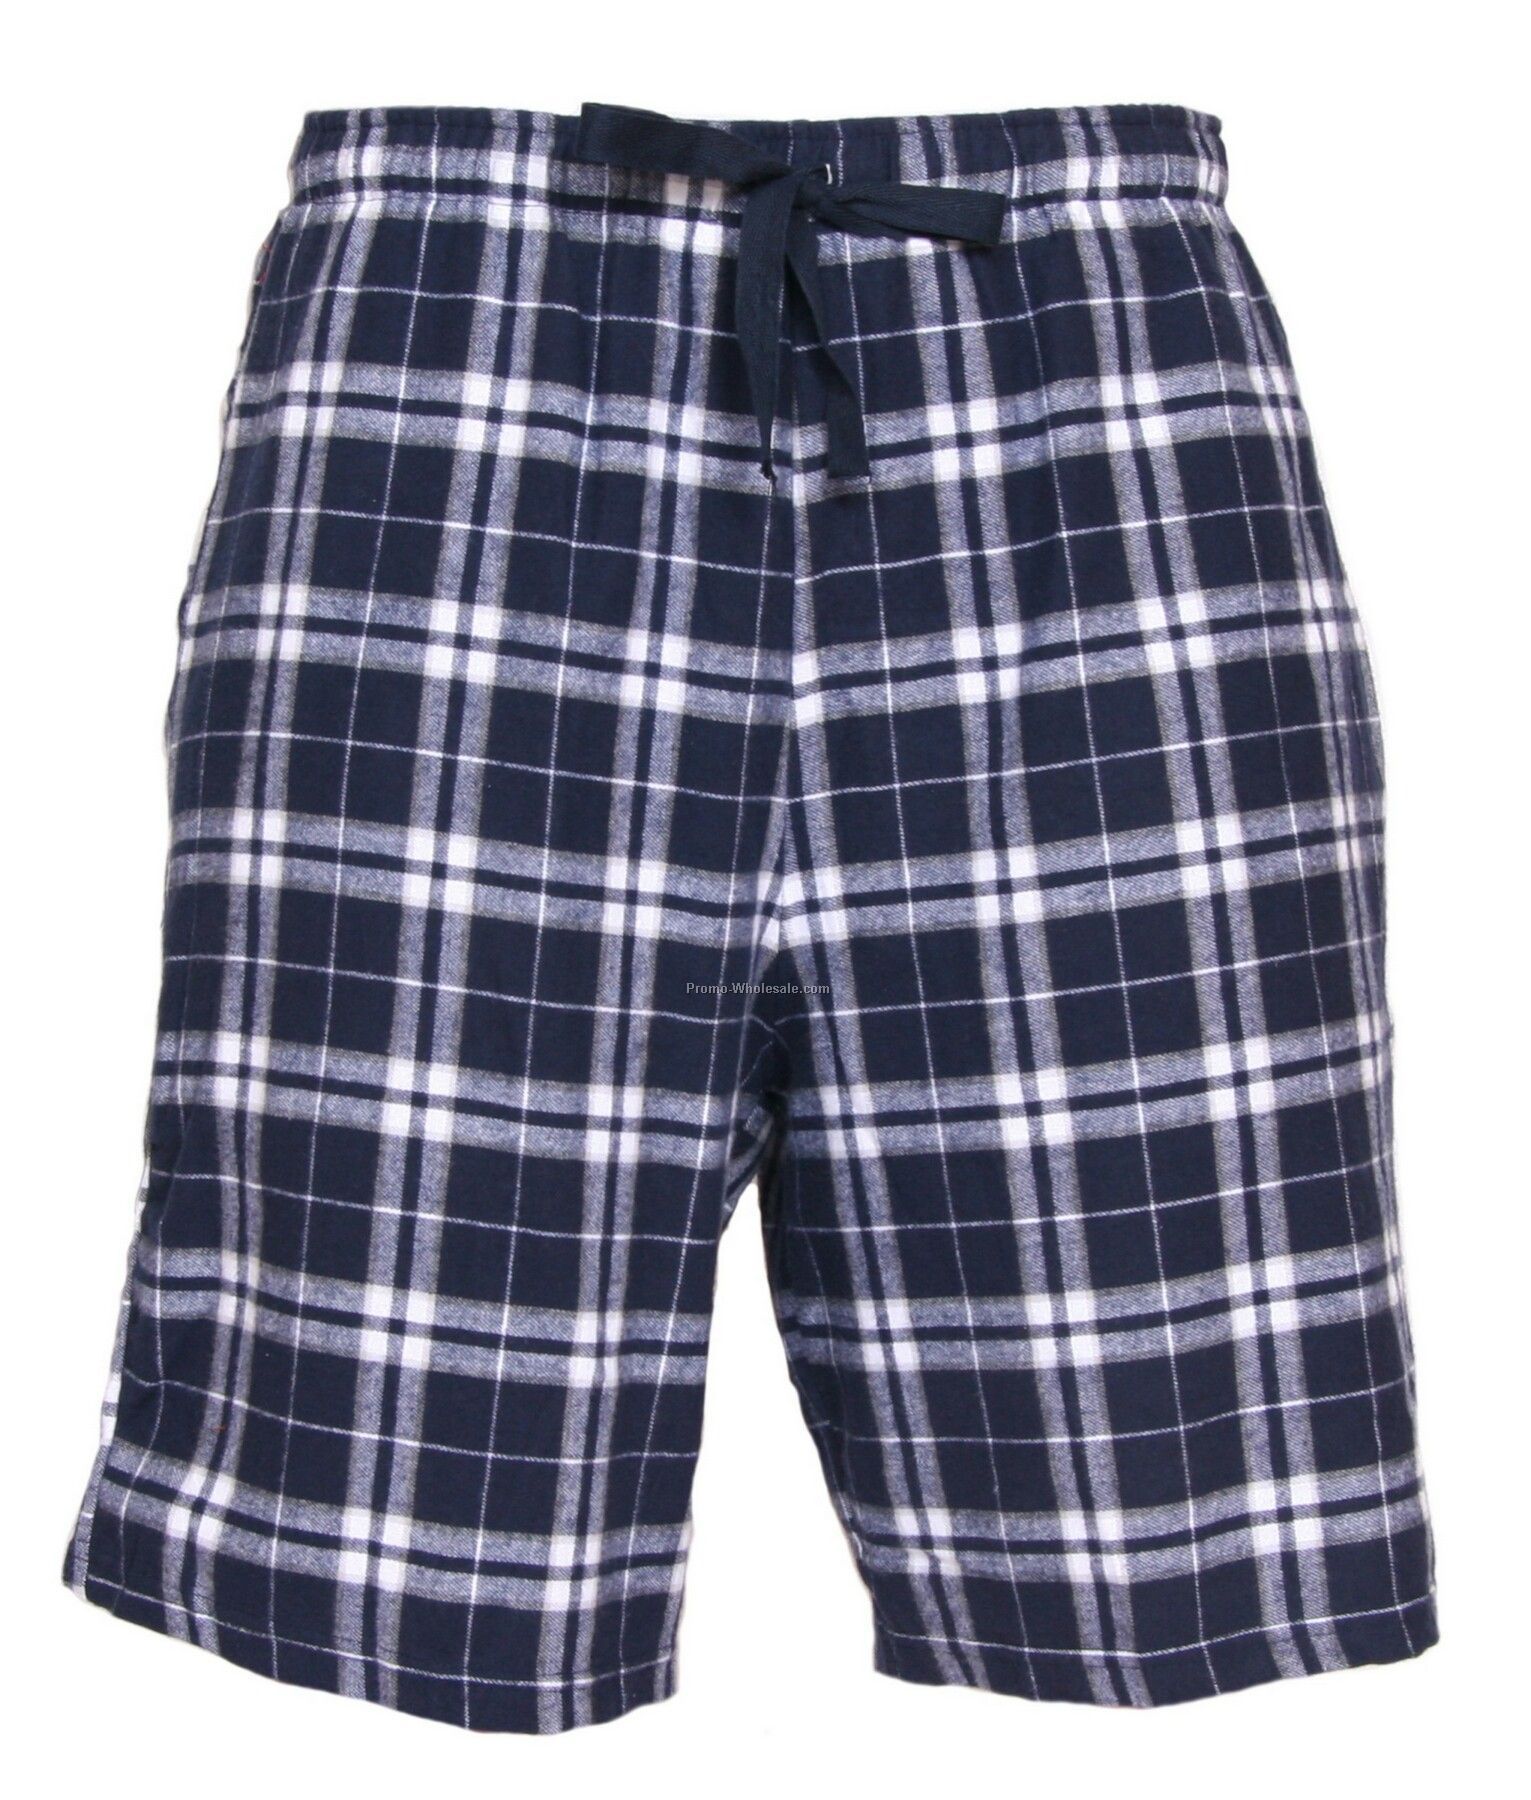 Adults' Navy Blue/ Silver Flannel Dorm Shorts (2xl)